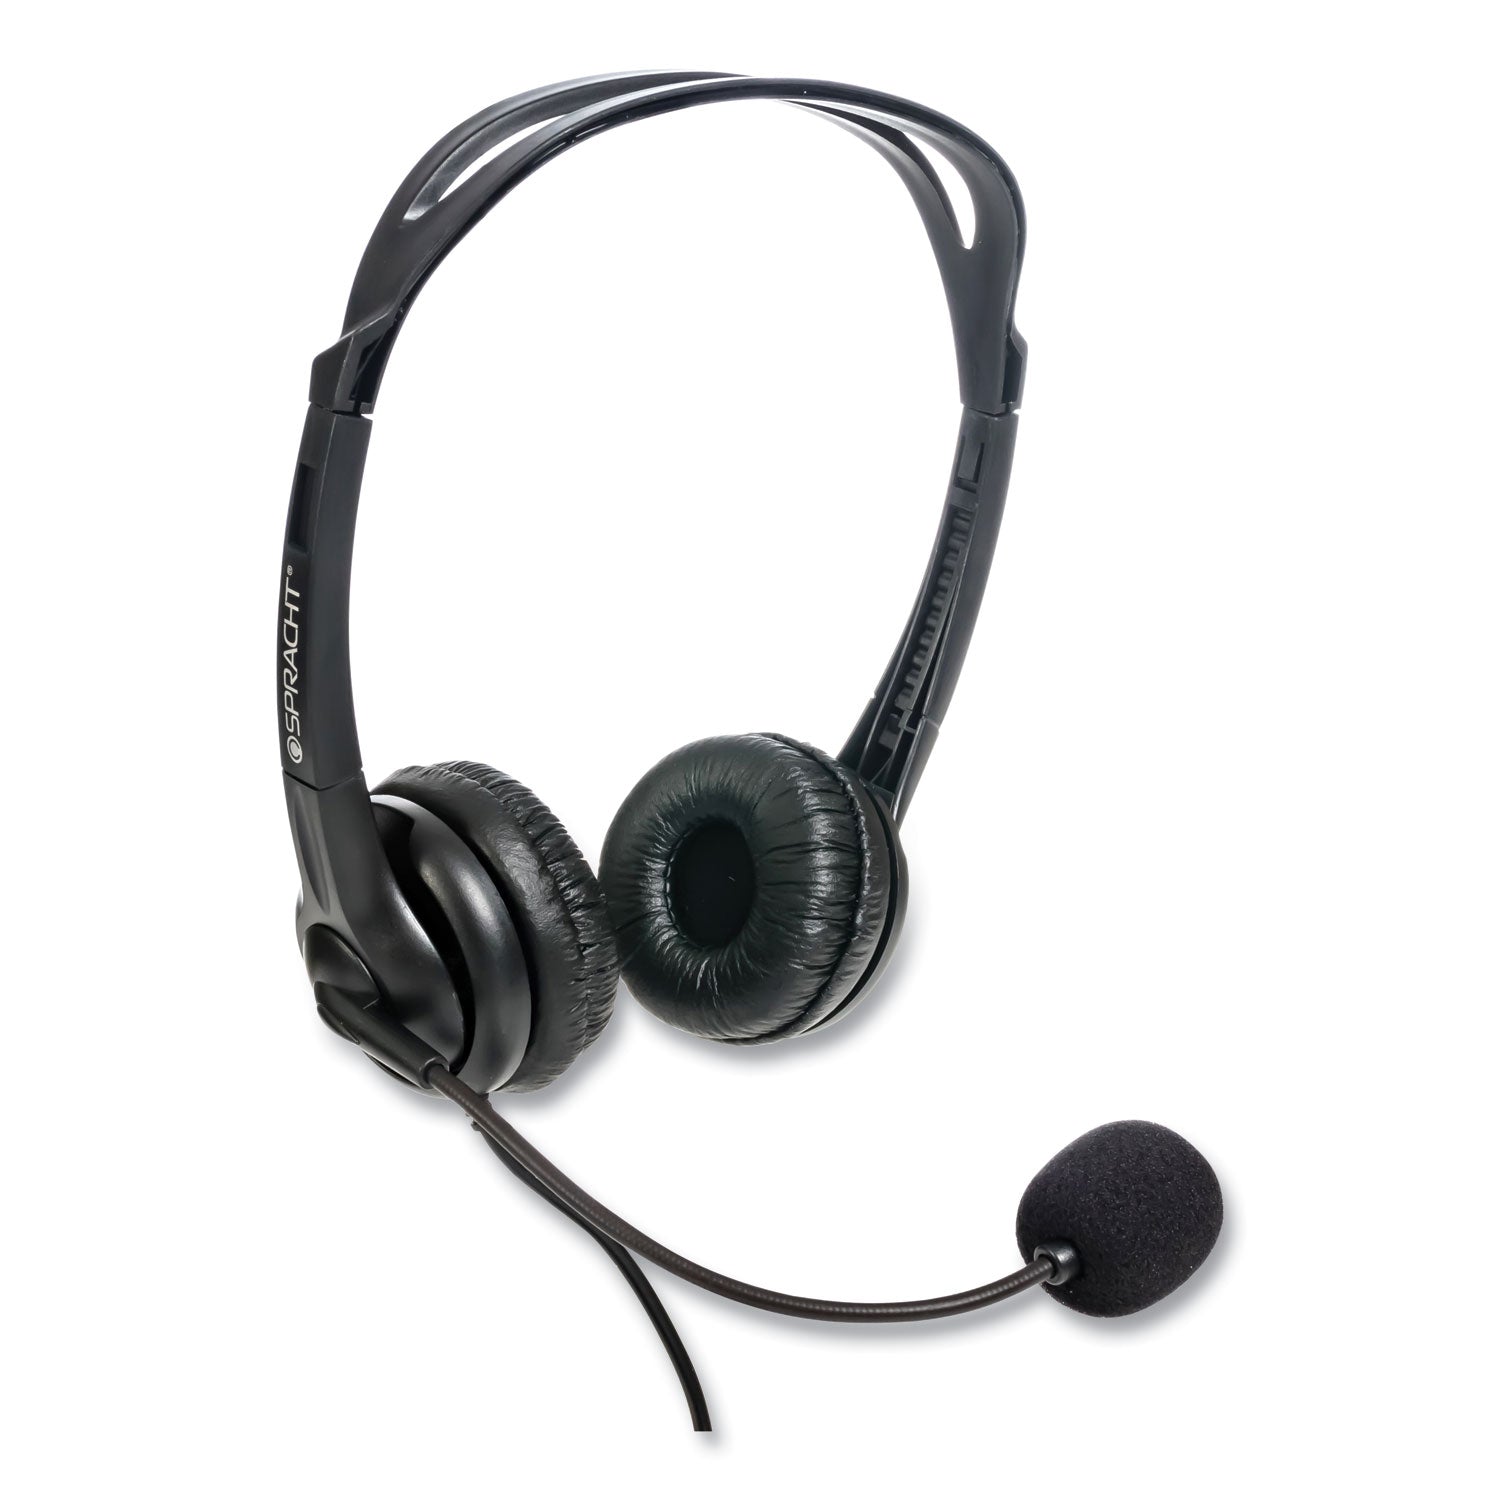 zum3500-binaural-over-the-head-usb-headset-black_sptzum3500 - 6